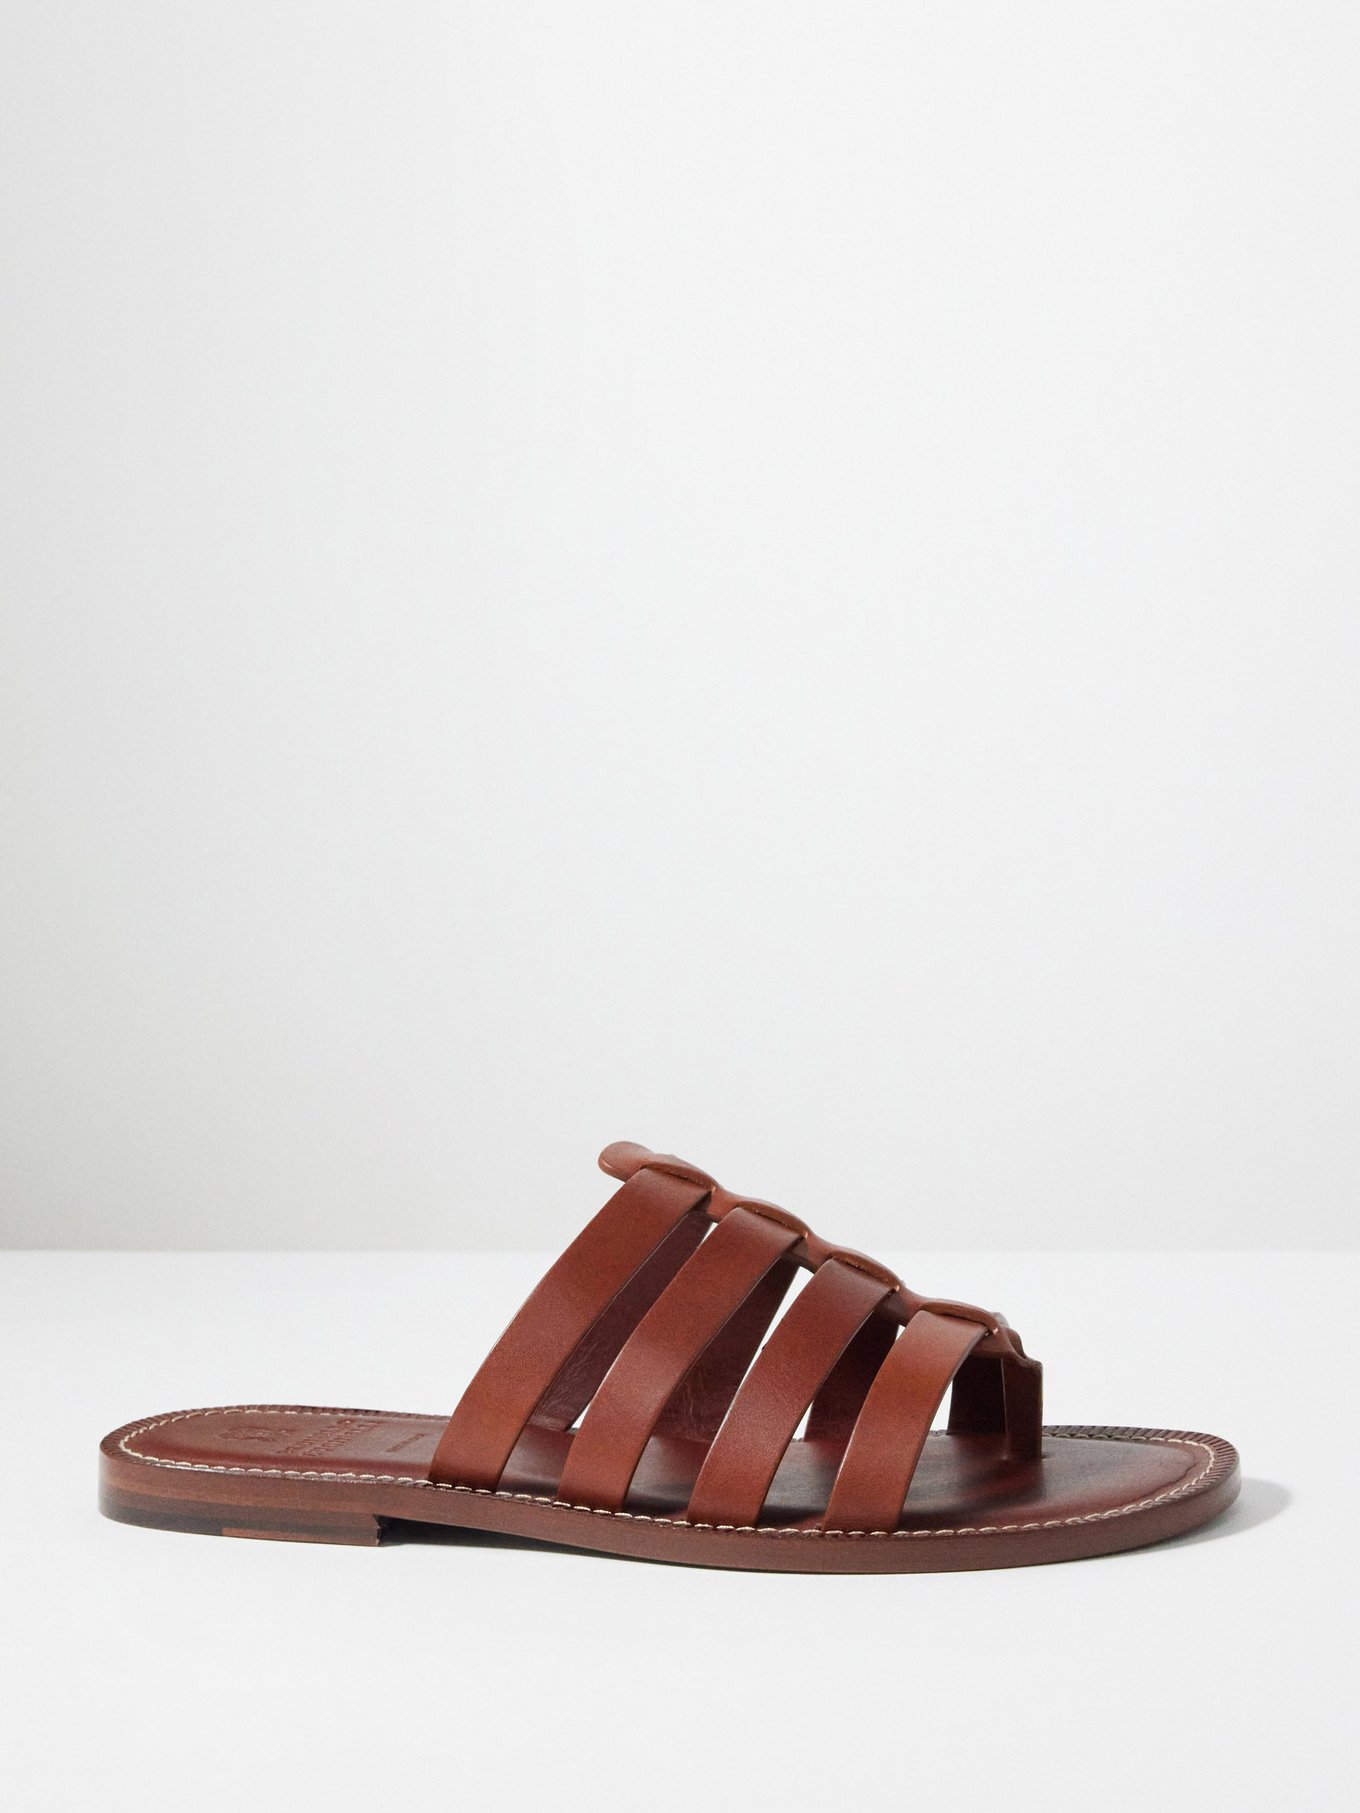 Leather sandals | Brunello Cucinelli